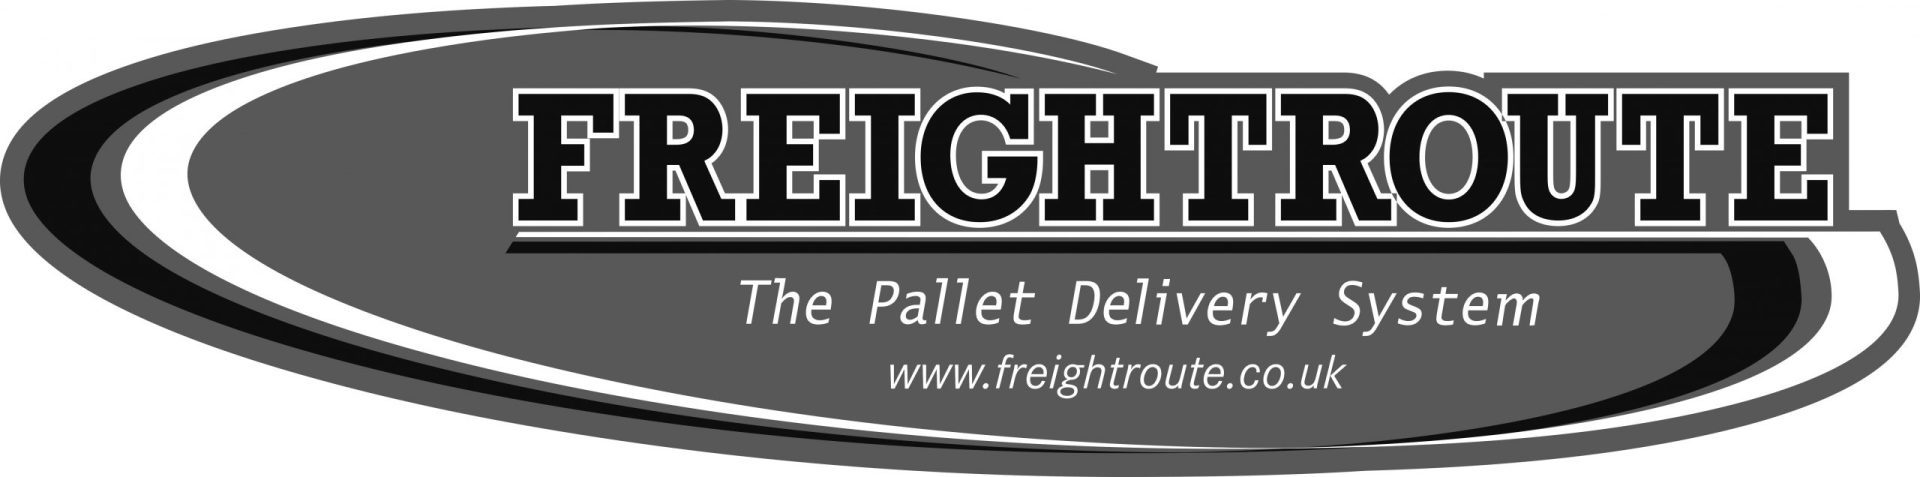 Freightroute-logo